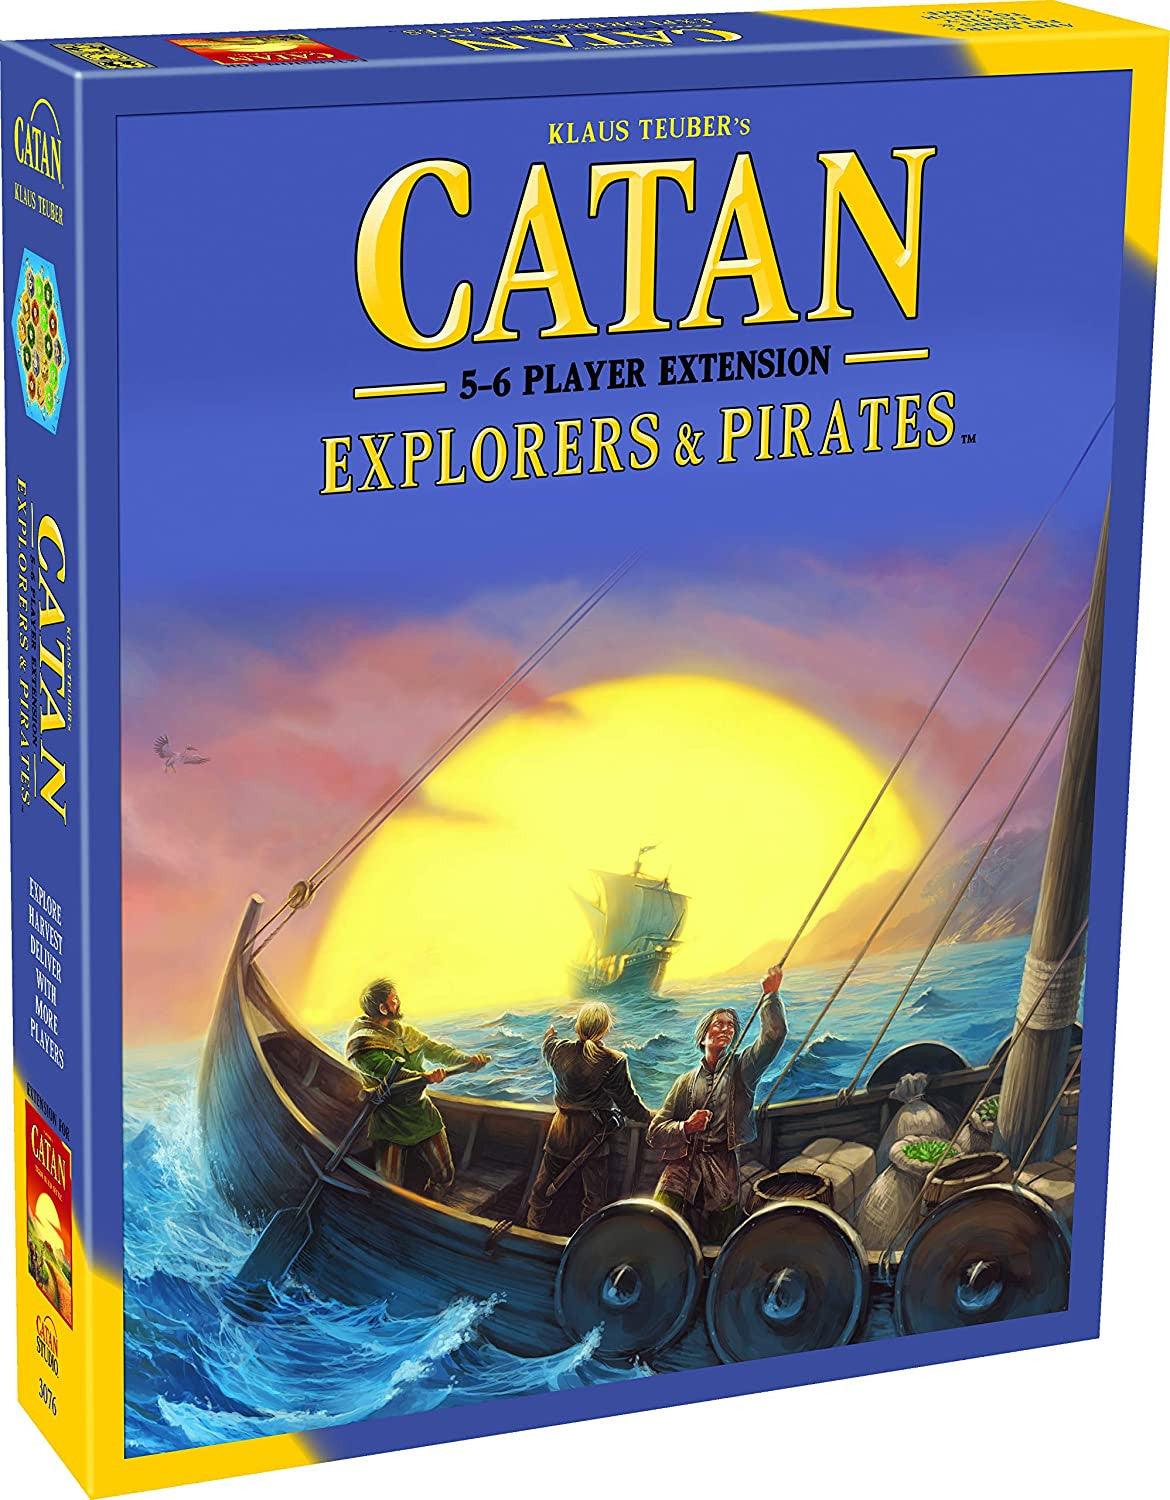 VR-27135 Catan Explorers and Pirates 5-6 Player Extension - Catan Studio - Titan Pop Culture